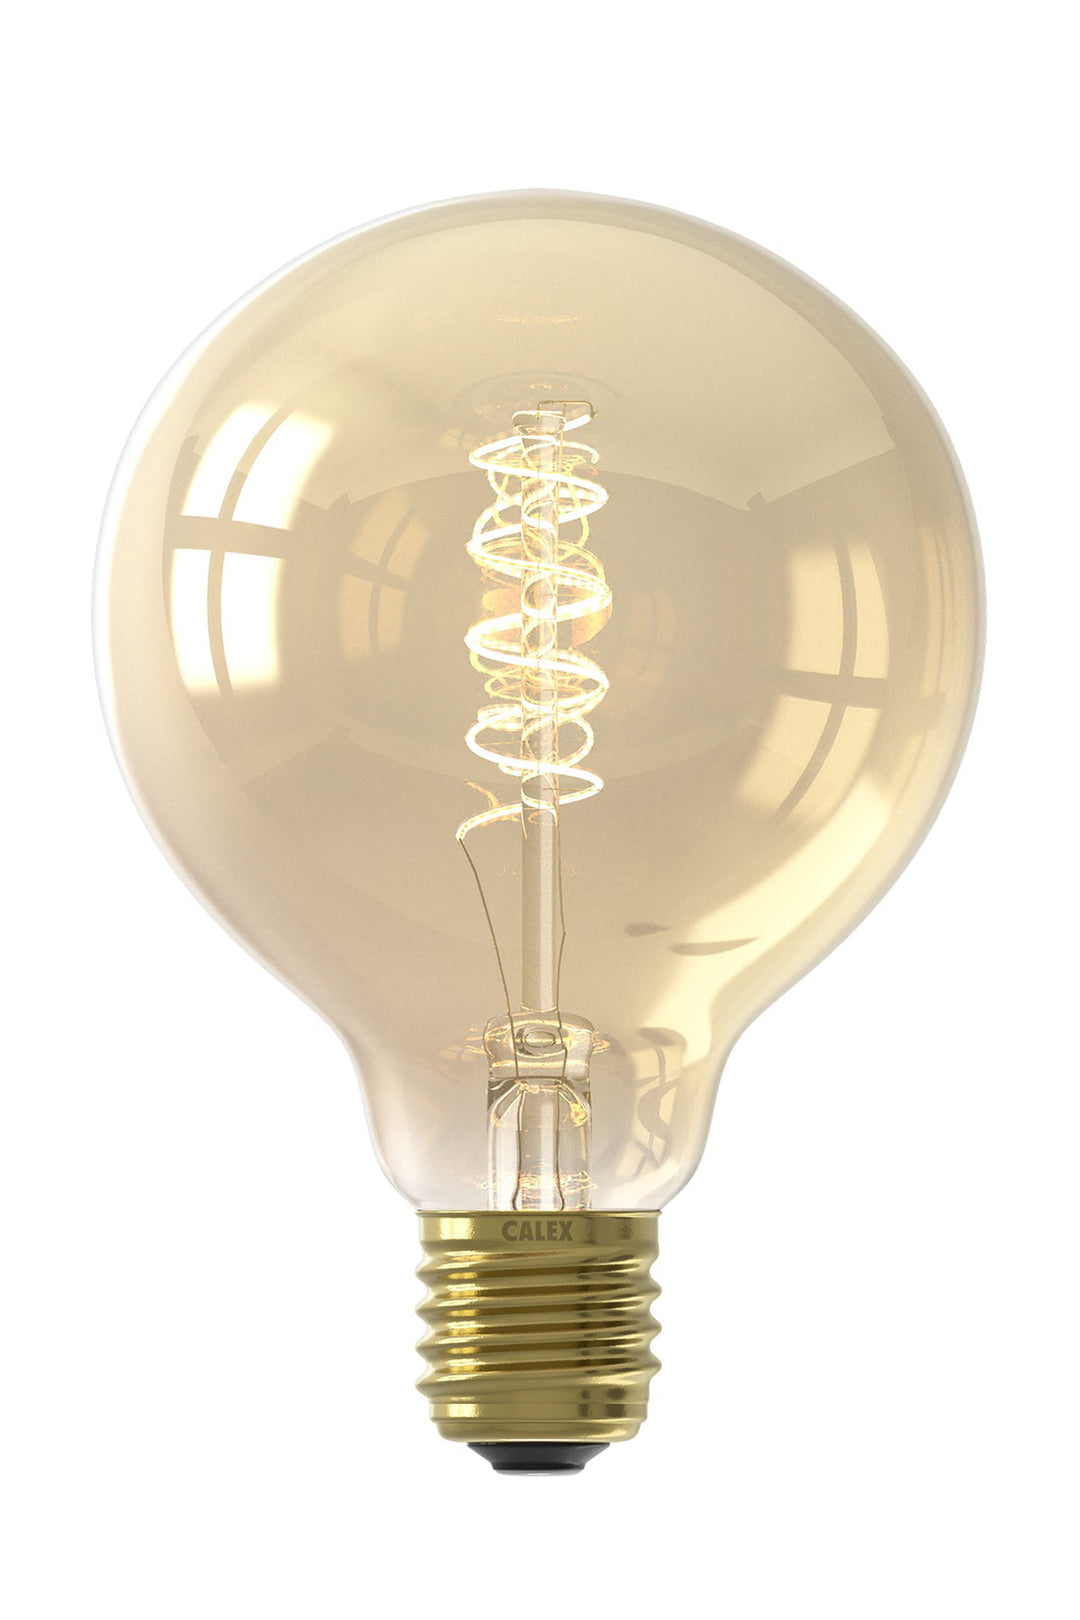 Calex LED Flex Filament Globe Lamp G95, Gold, E27, Dimmable 1001002100